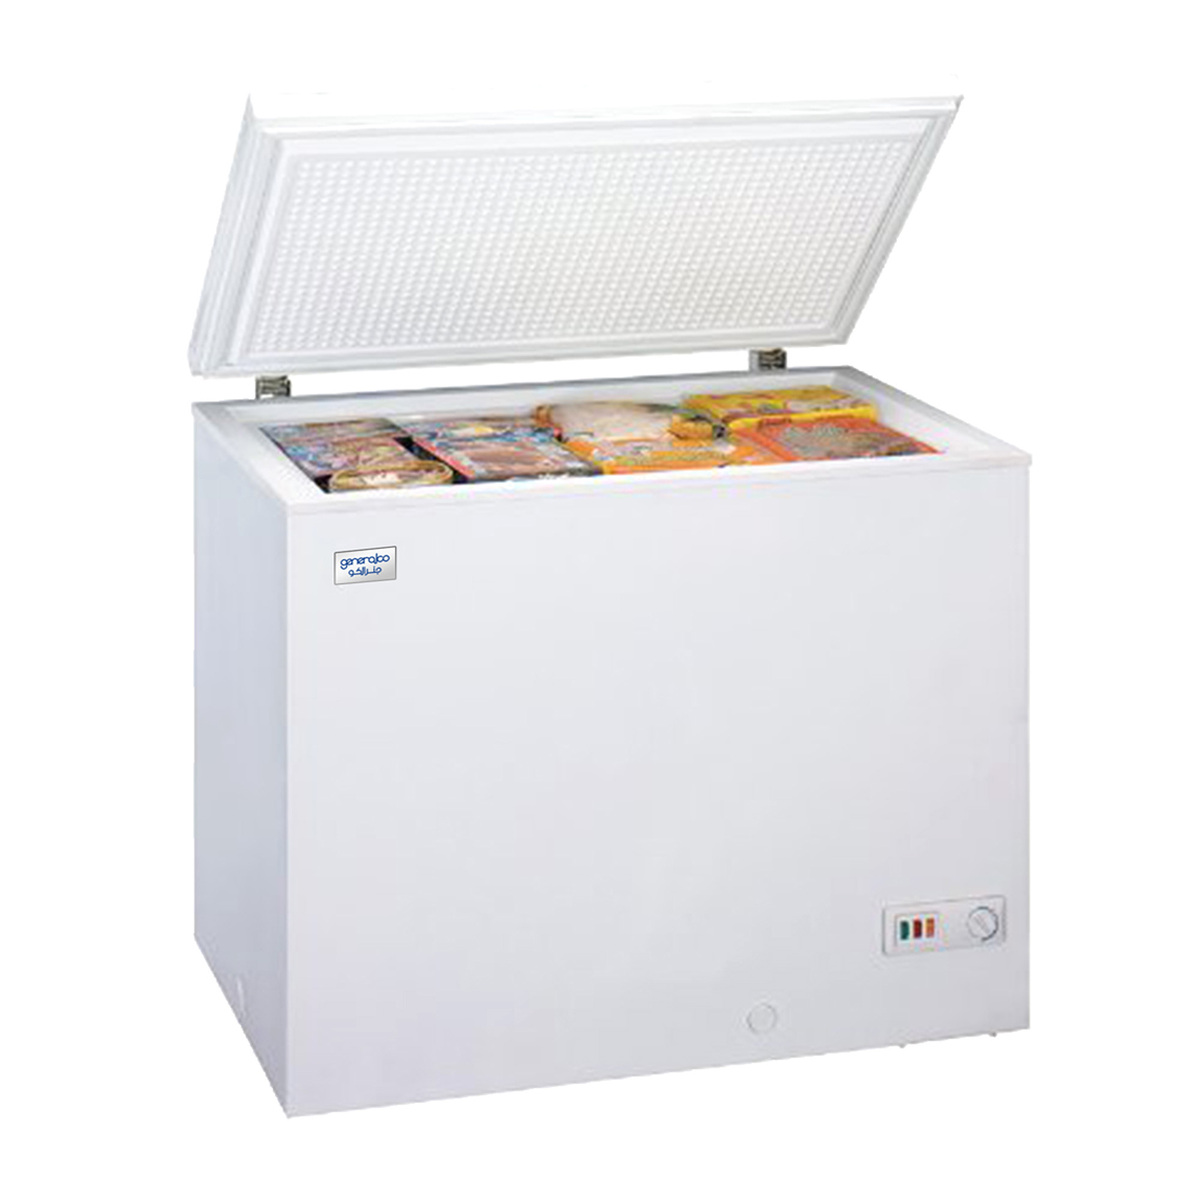 Generalco Chest Freezer, 310 L, White, GBD310T